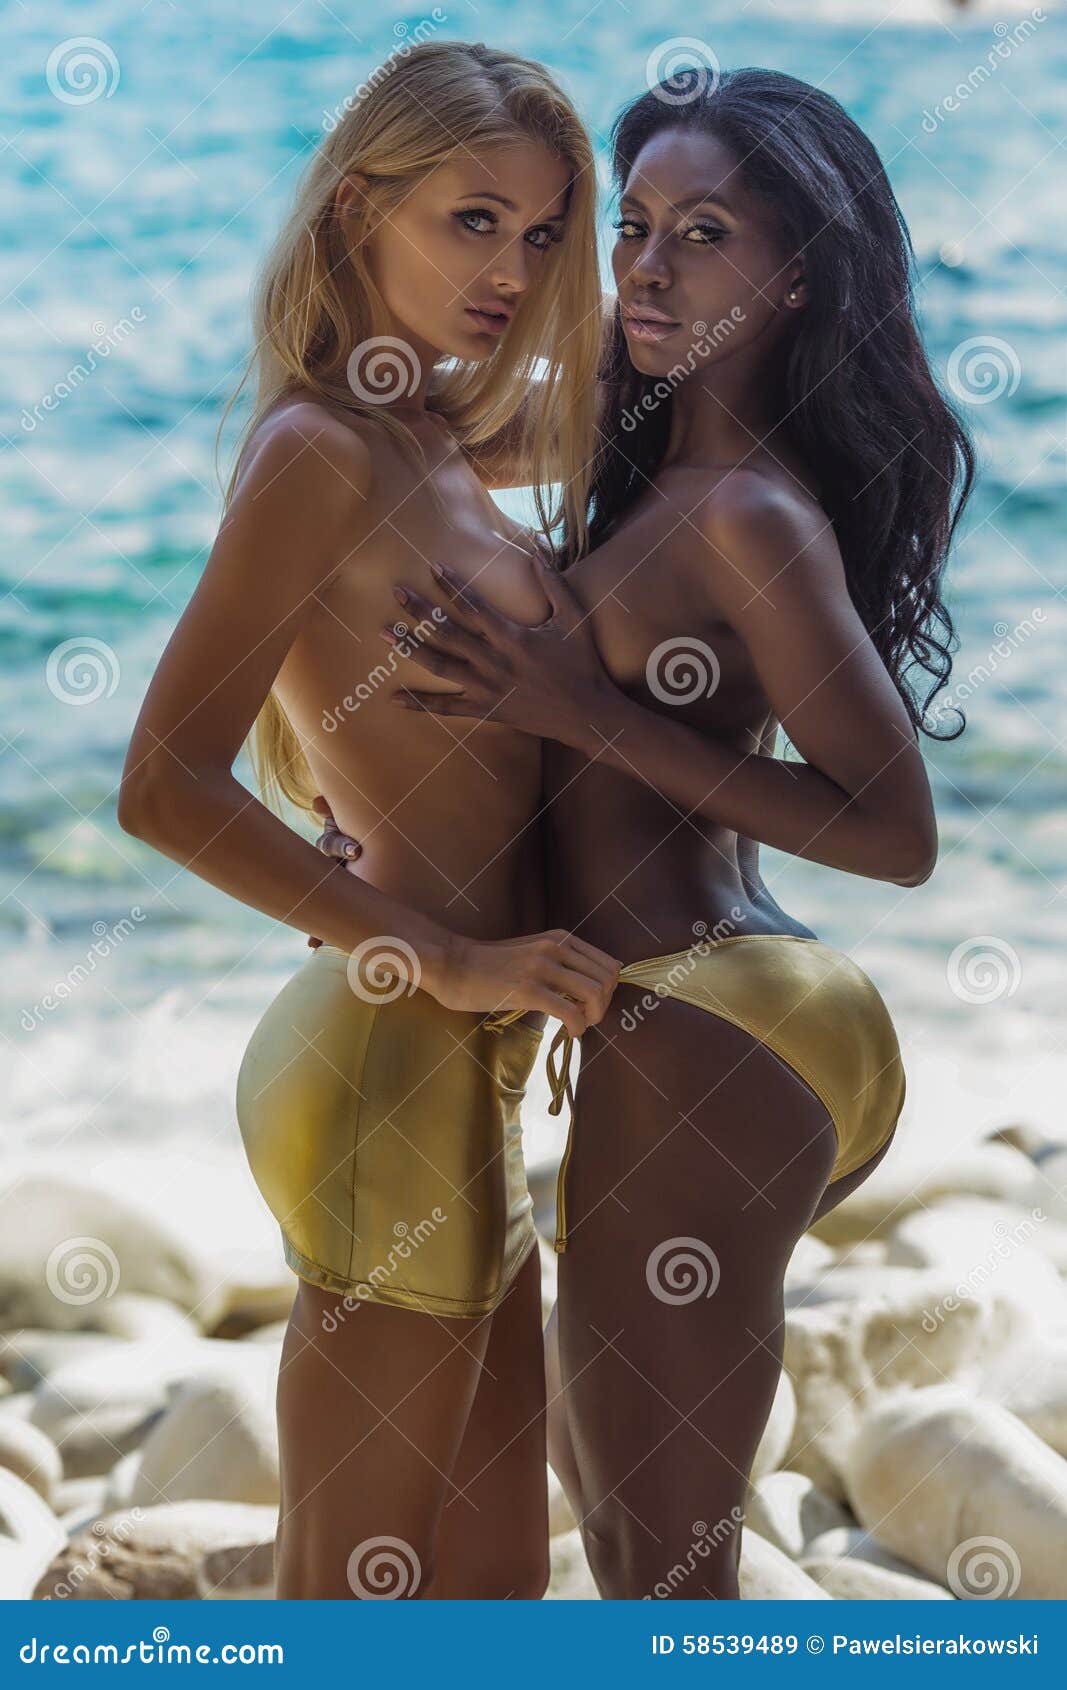 Females at nude beach